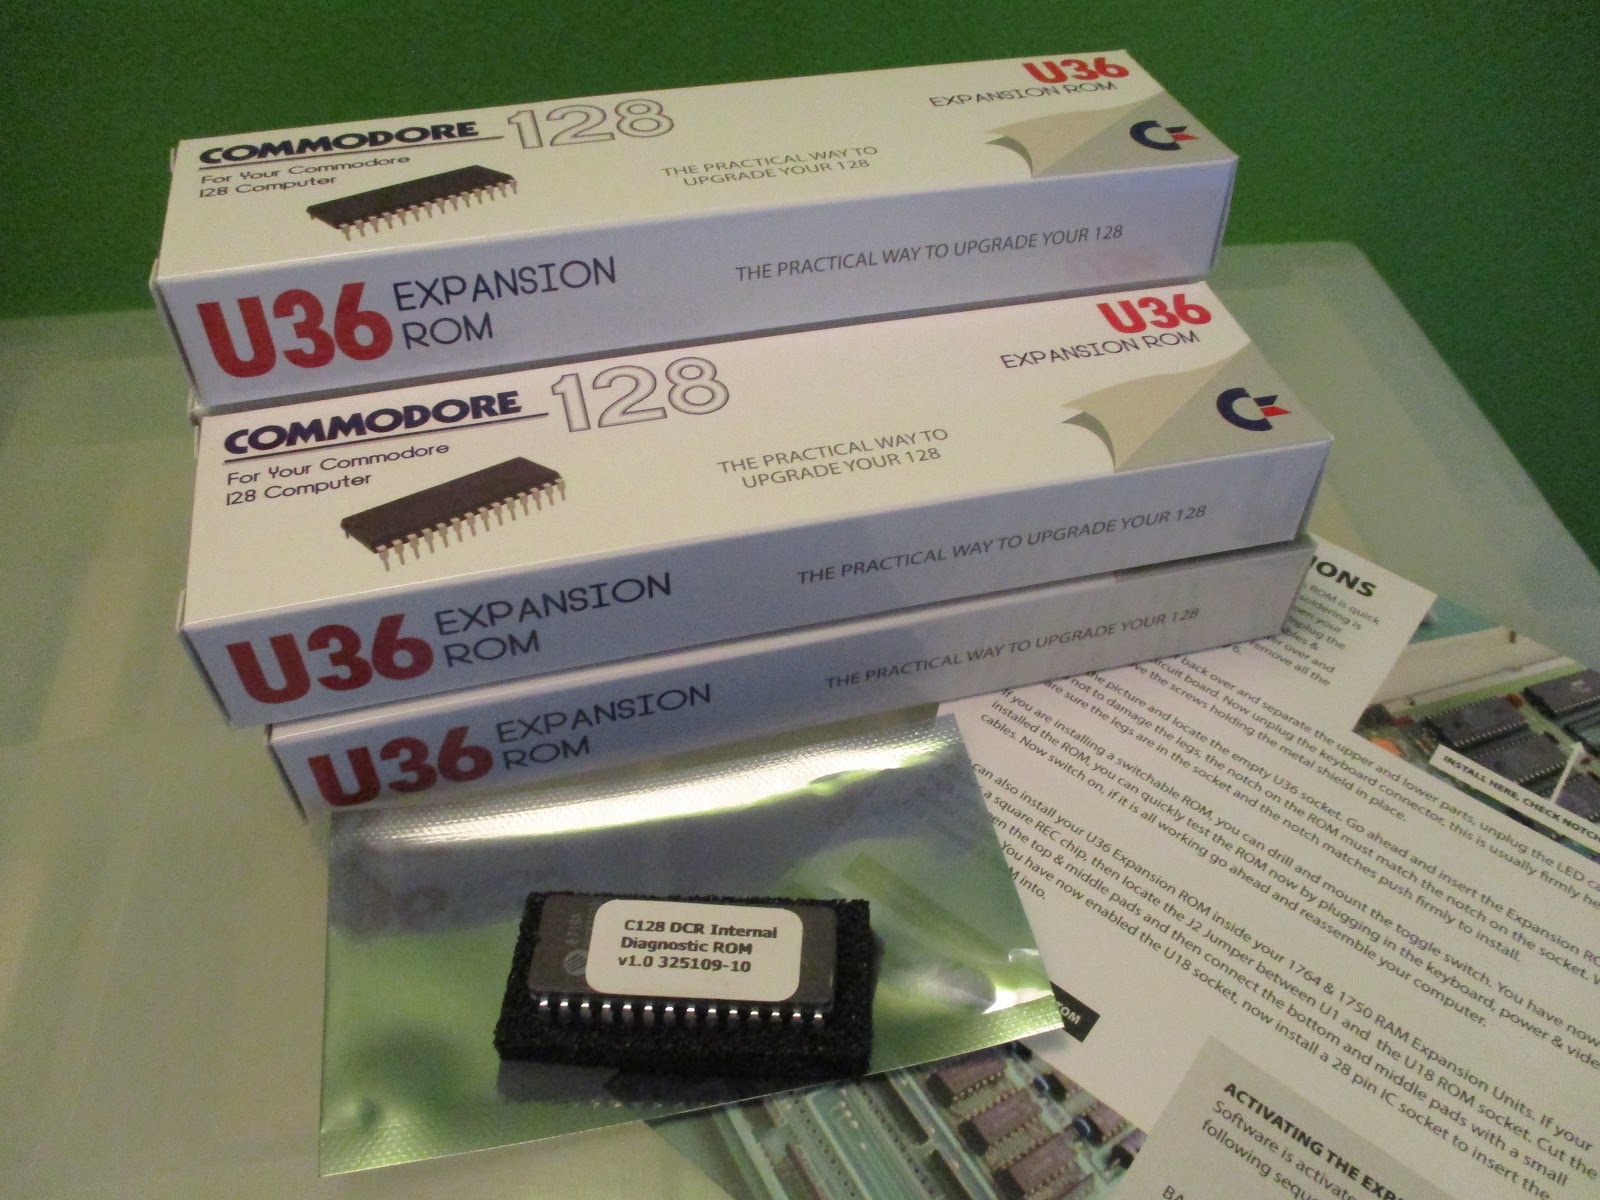 C128 DCR U36 Expansion ROM